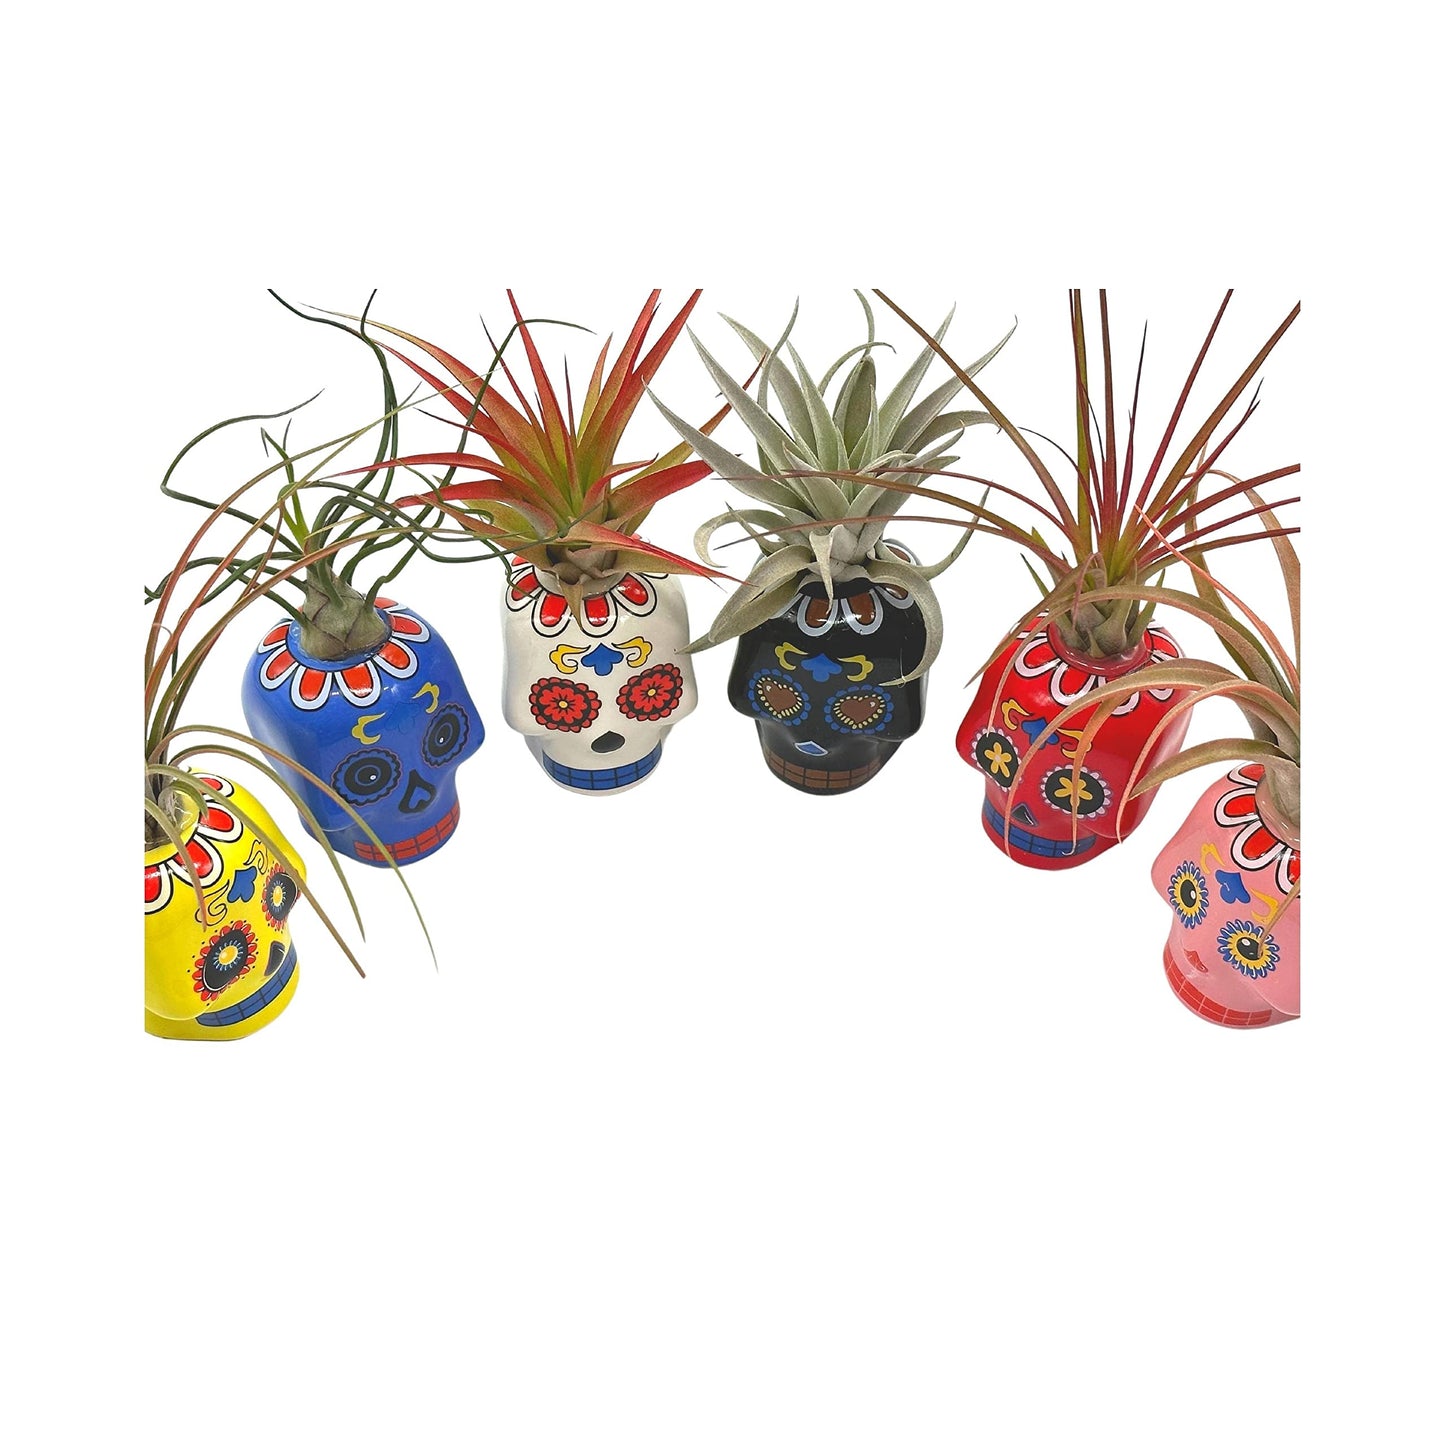 Resin Sugar Skulls Air Plant Sculpture, Tillandsia Planted in Colorful Candy Skulls Hand Made Art Assorted Set of 6